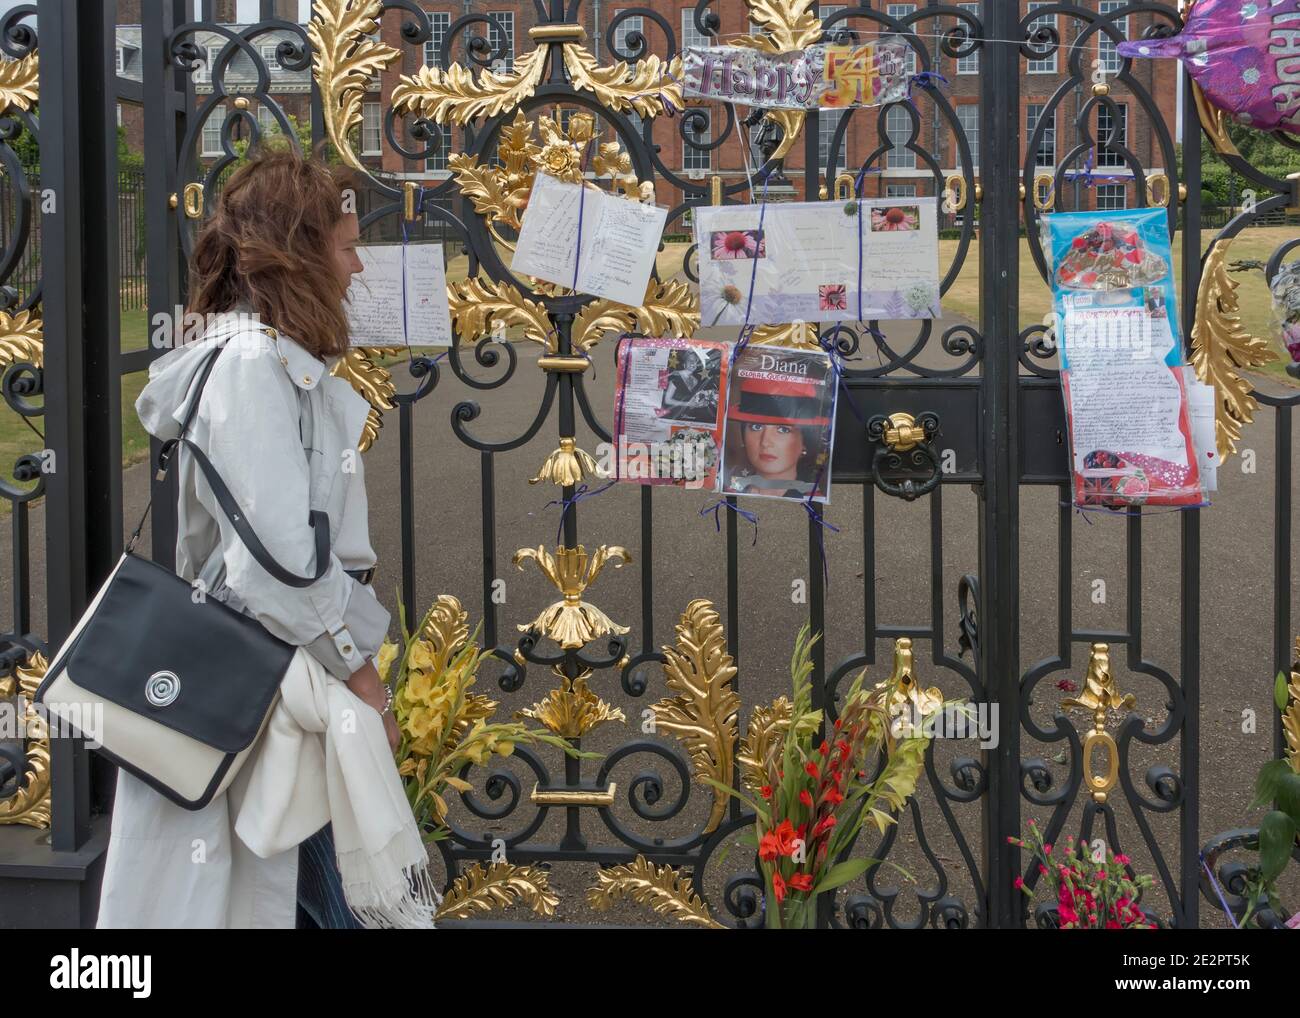 Tributes to Diana Princess of Wales, Kensington Palace, London, England, UK Stock Photo